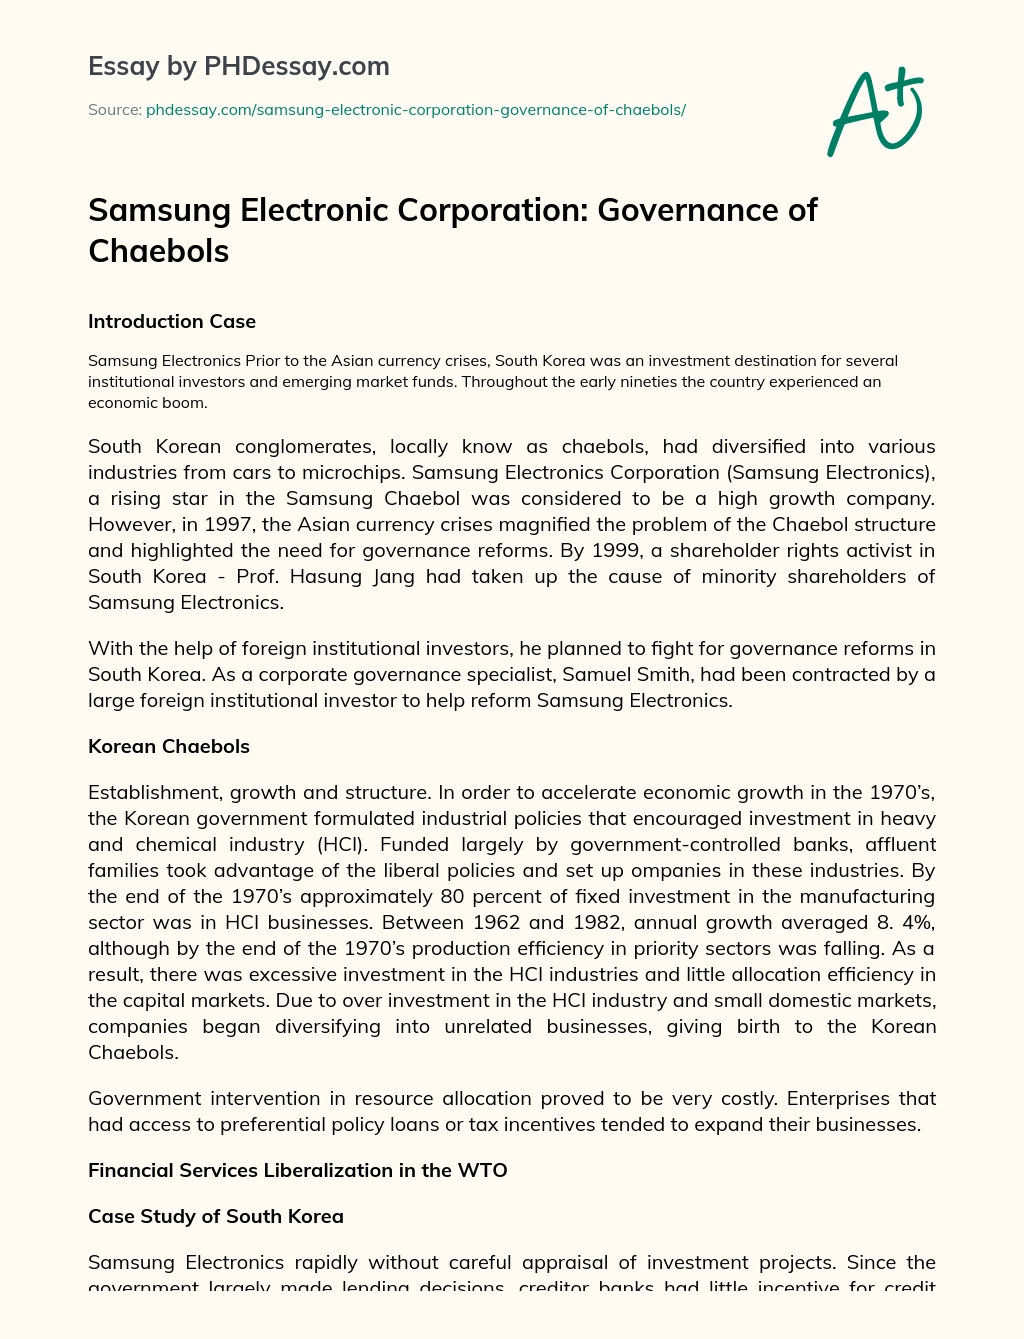 Samsung Electronic Corporation: Governance of Chaebols essay